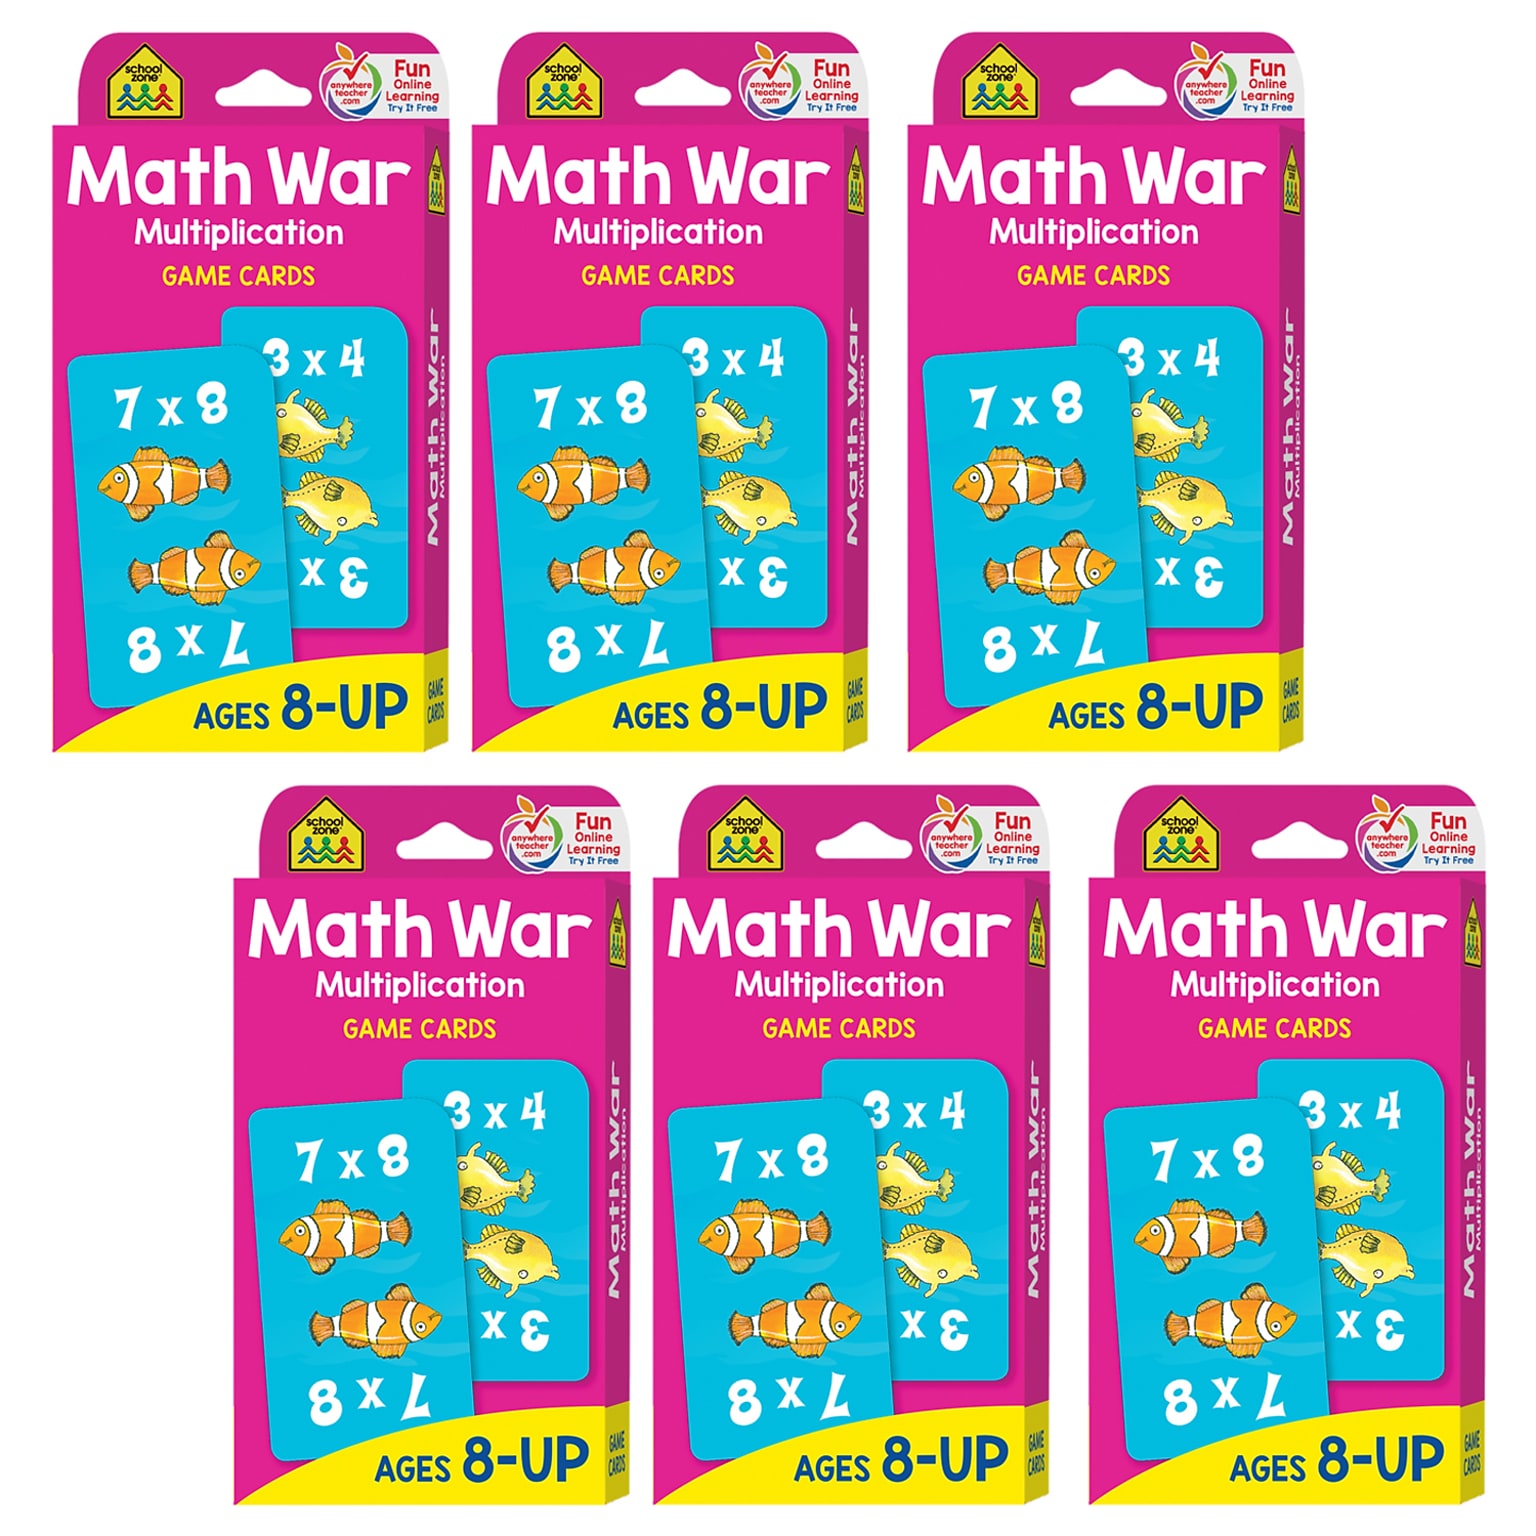 School Zone Publishing Math War Multiplication Game Cards, 6 Sets (SZP05032-6)